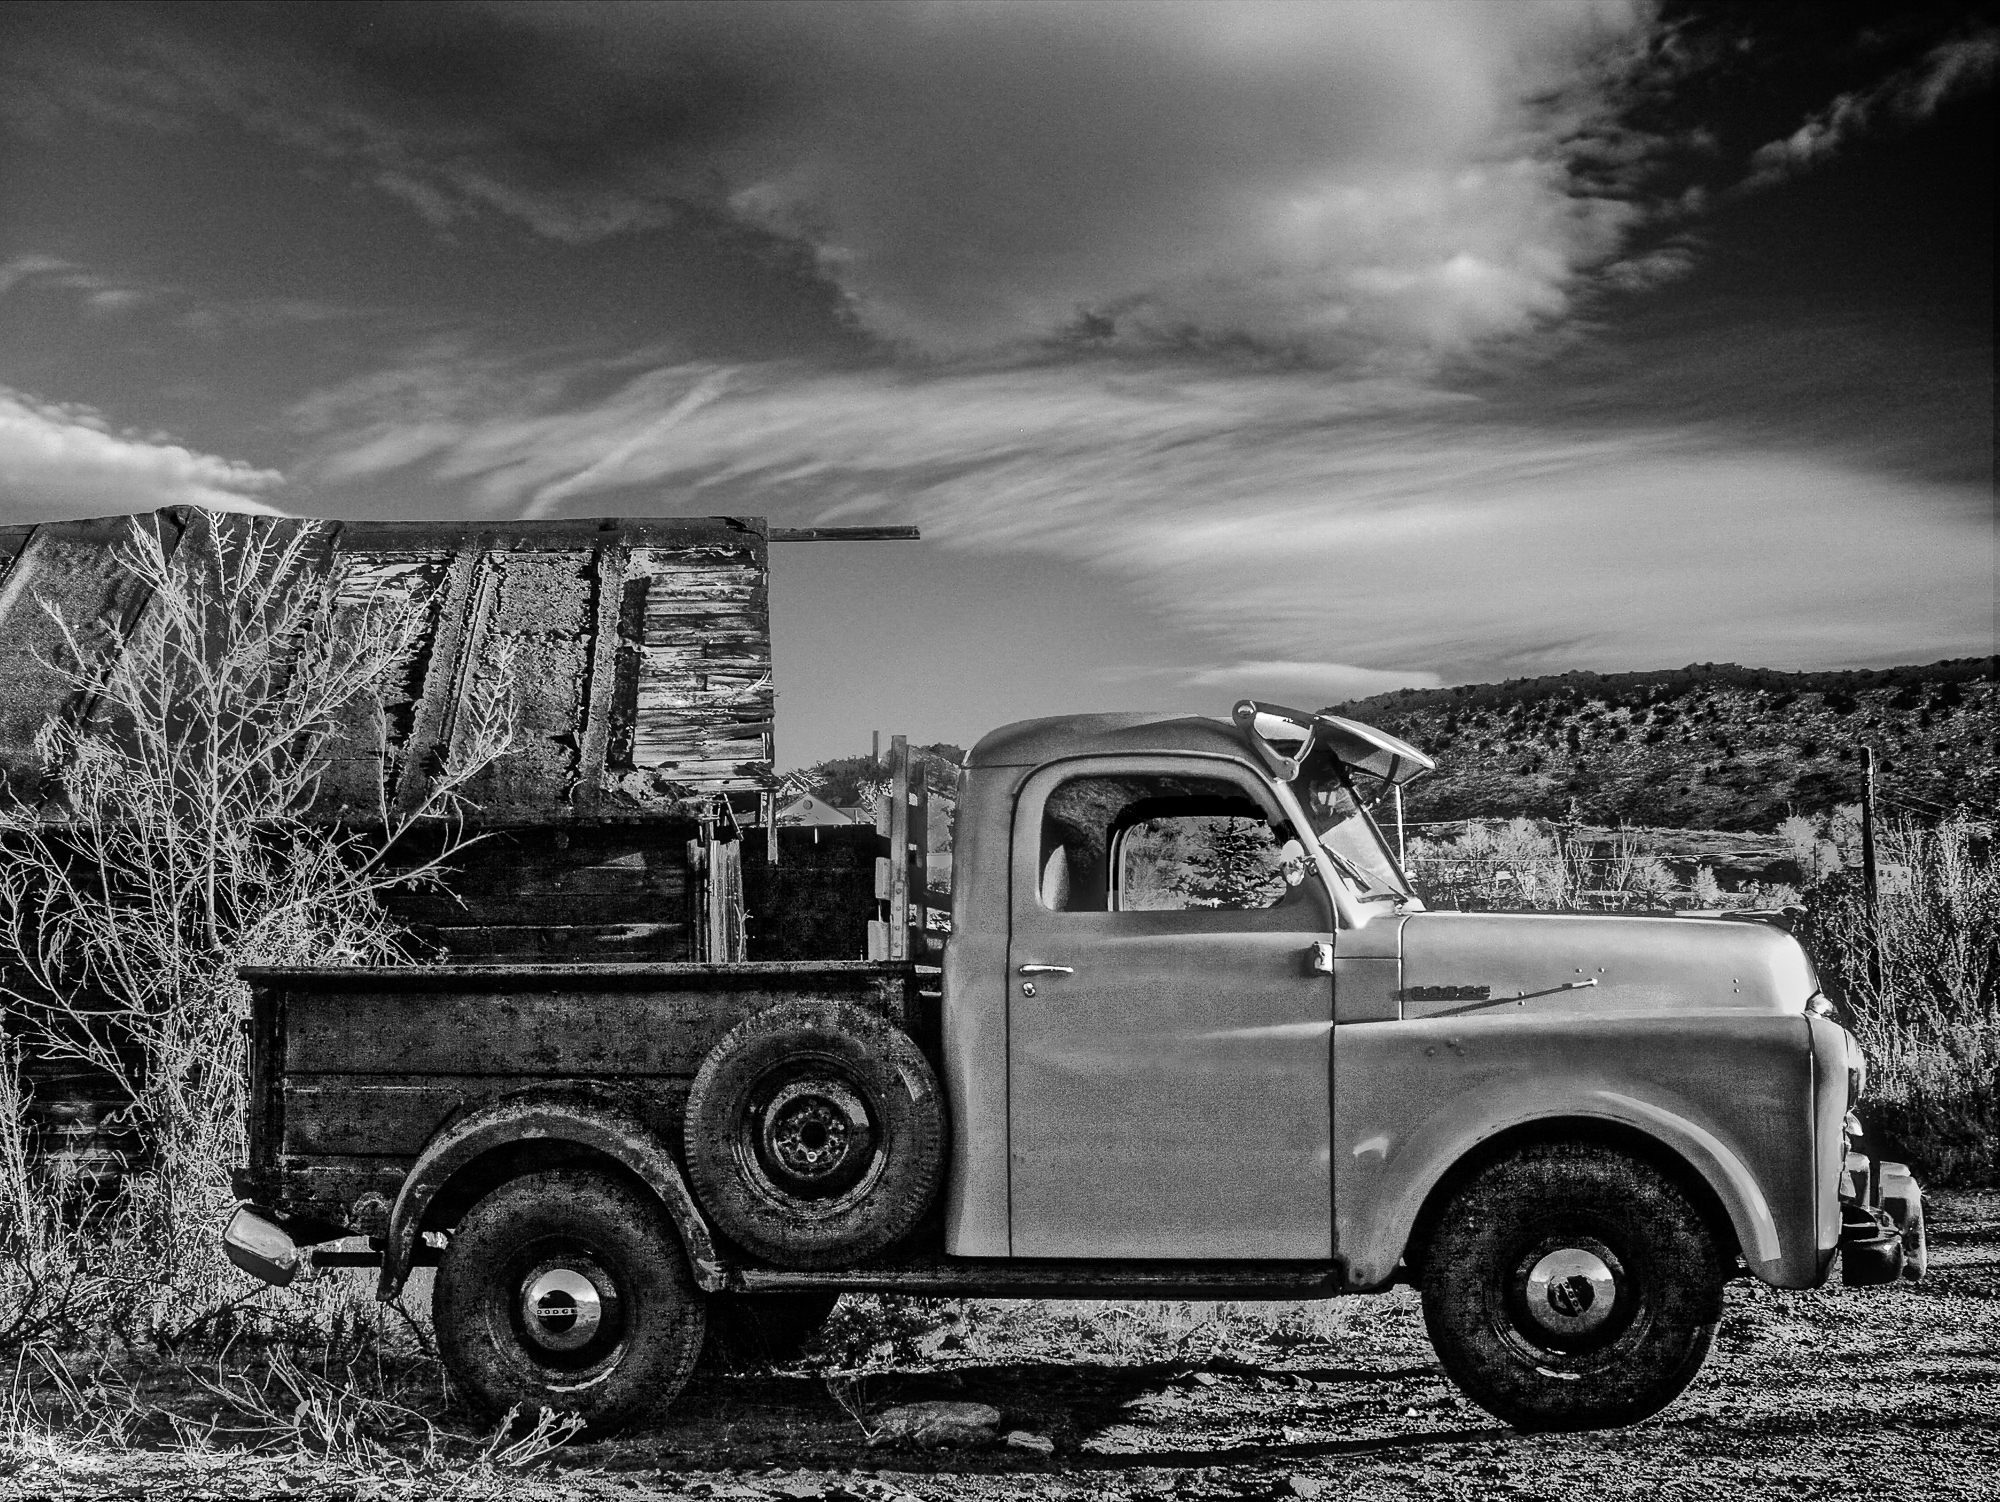 Dodge Truck B&W with sky & lighting